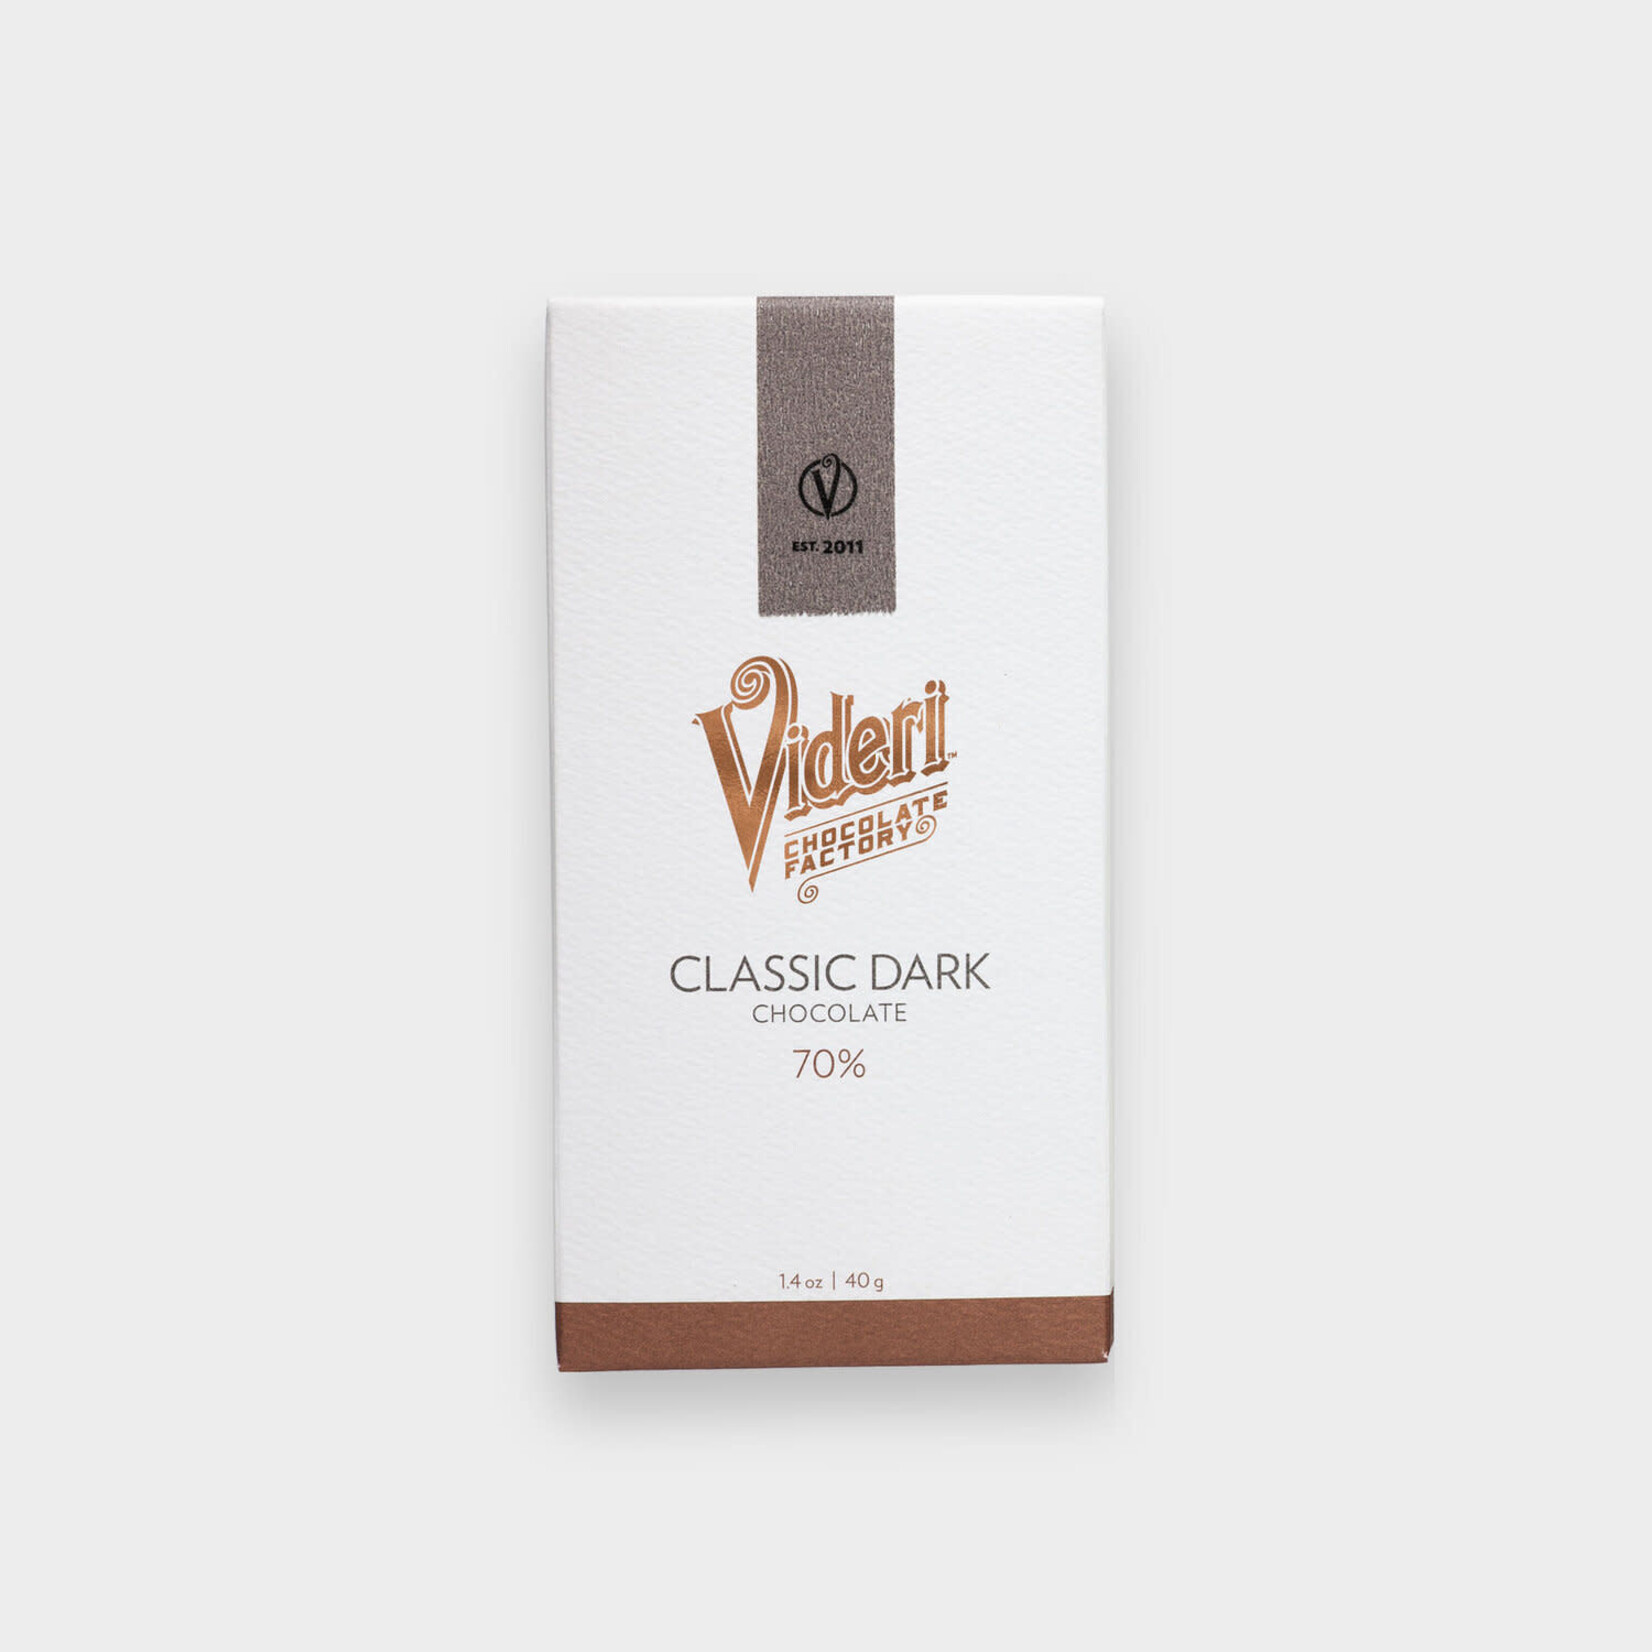 Videri Chocolate Factory Videri Chocolate Bar 1.4 oz Classic Dark